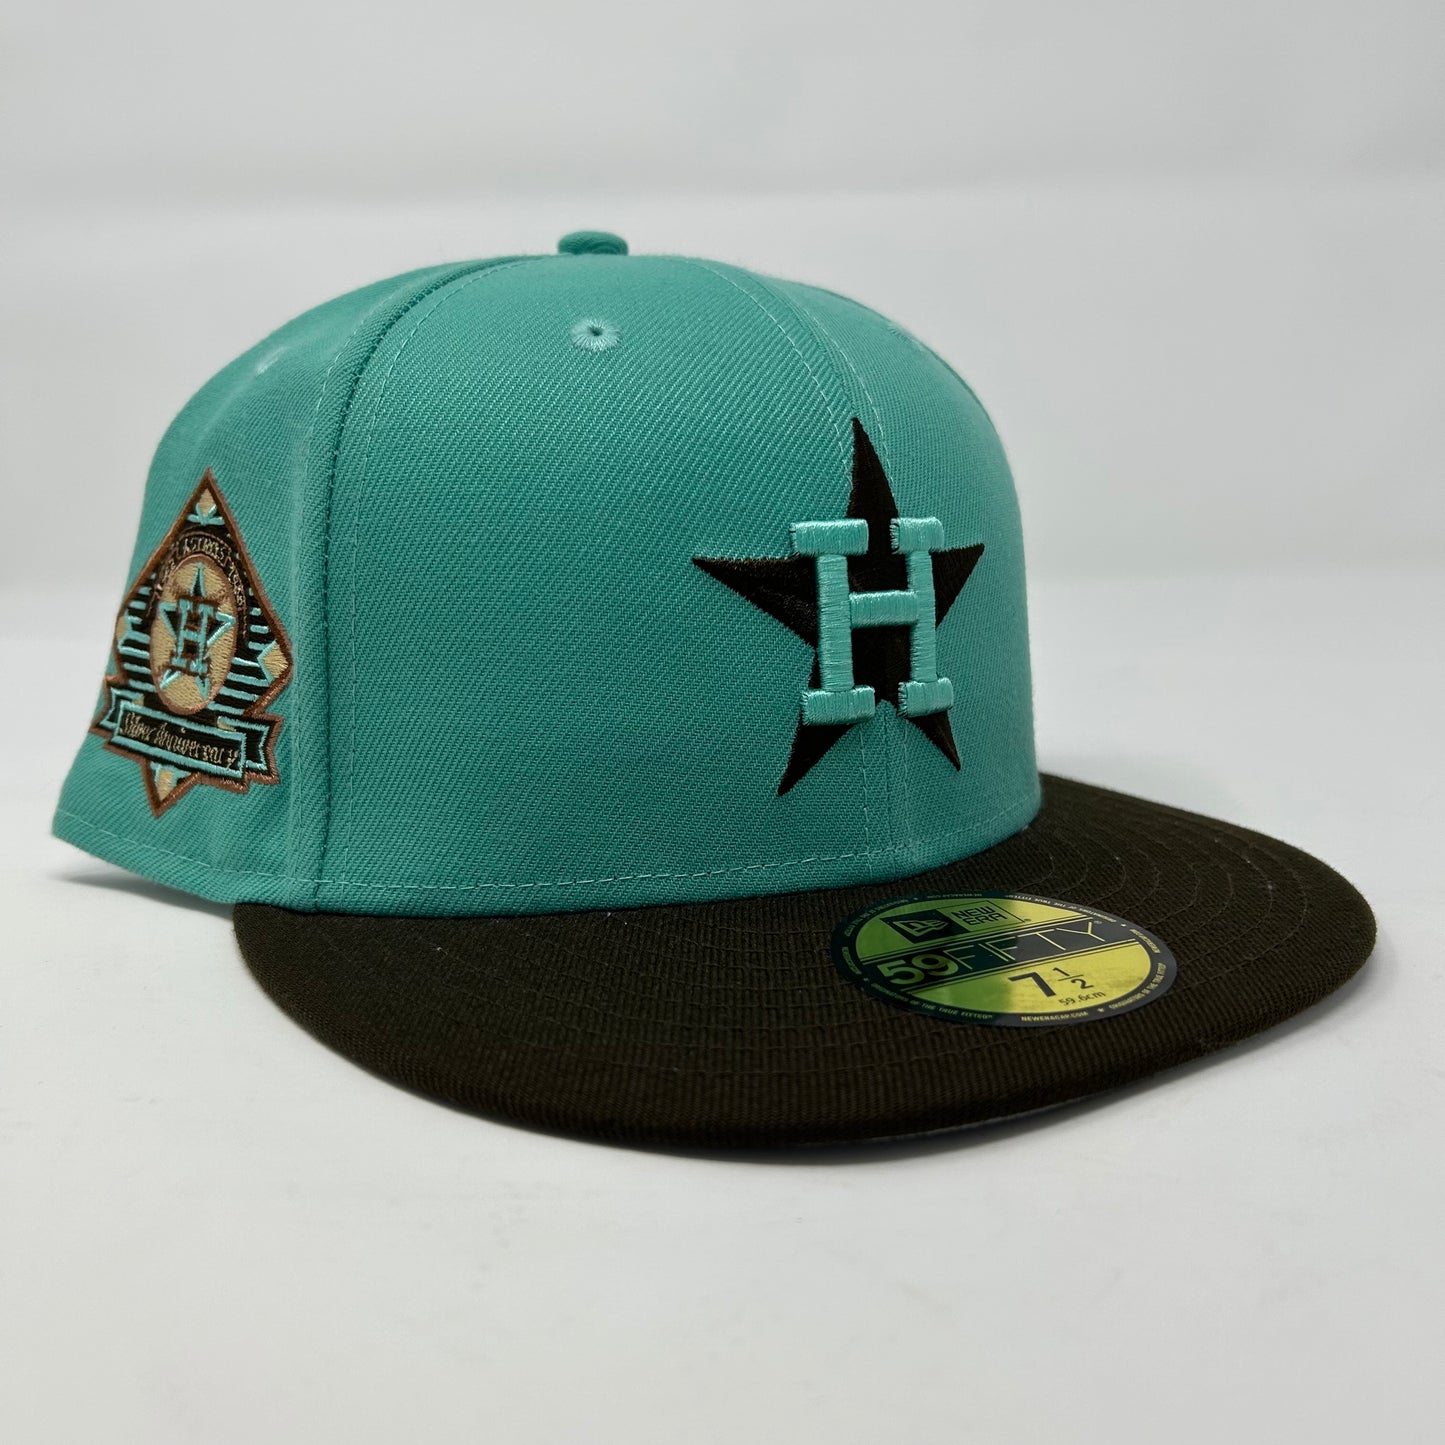 Houston Astros “Mint” Hat